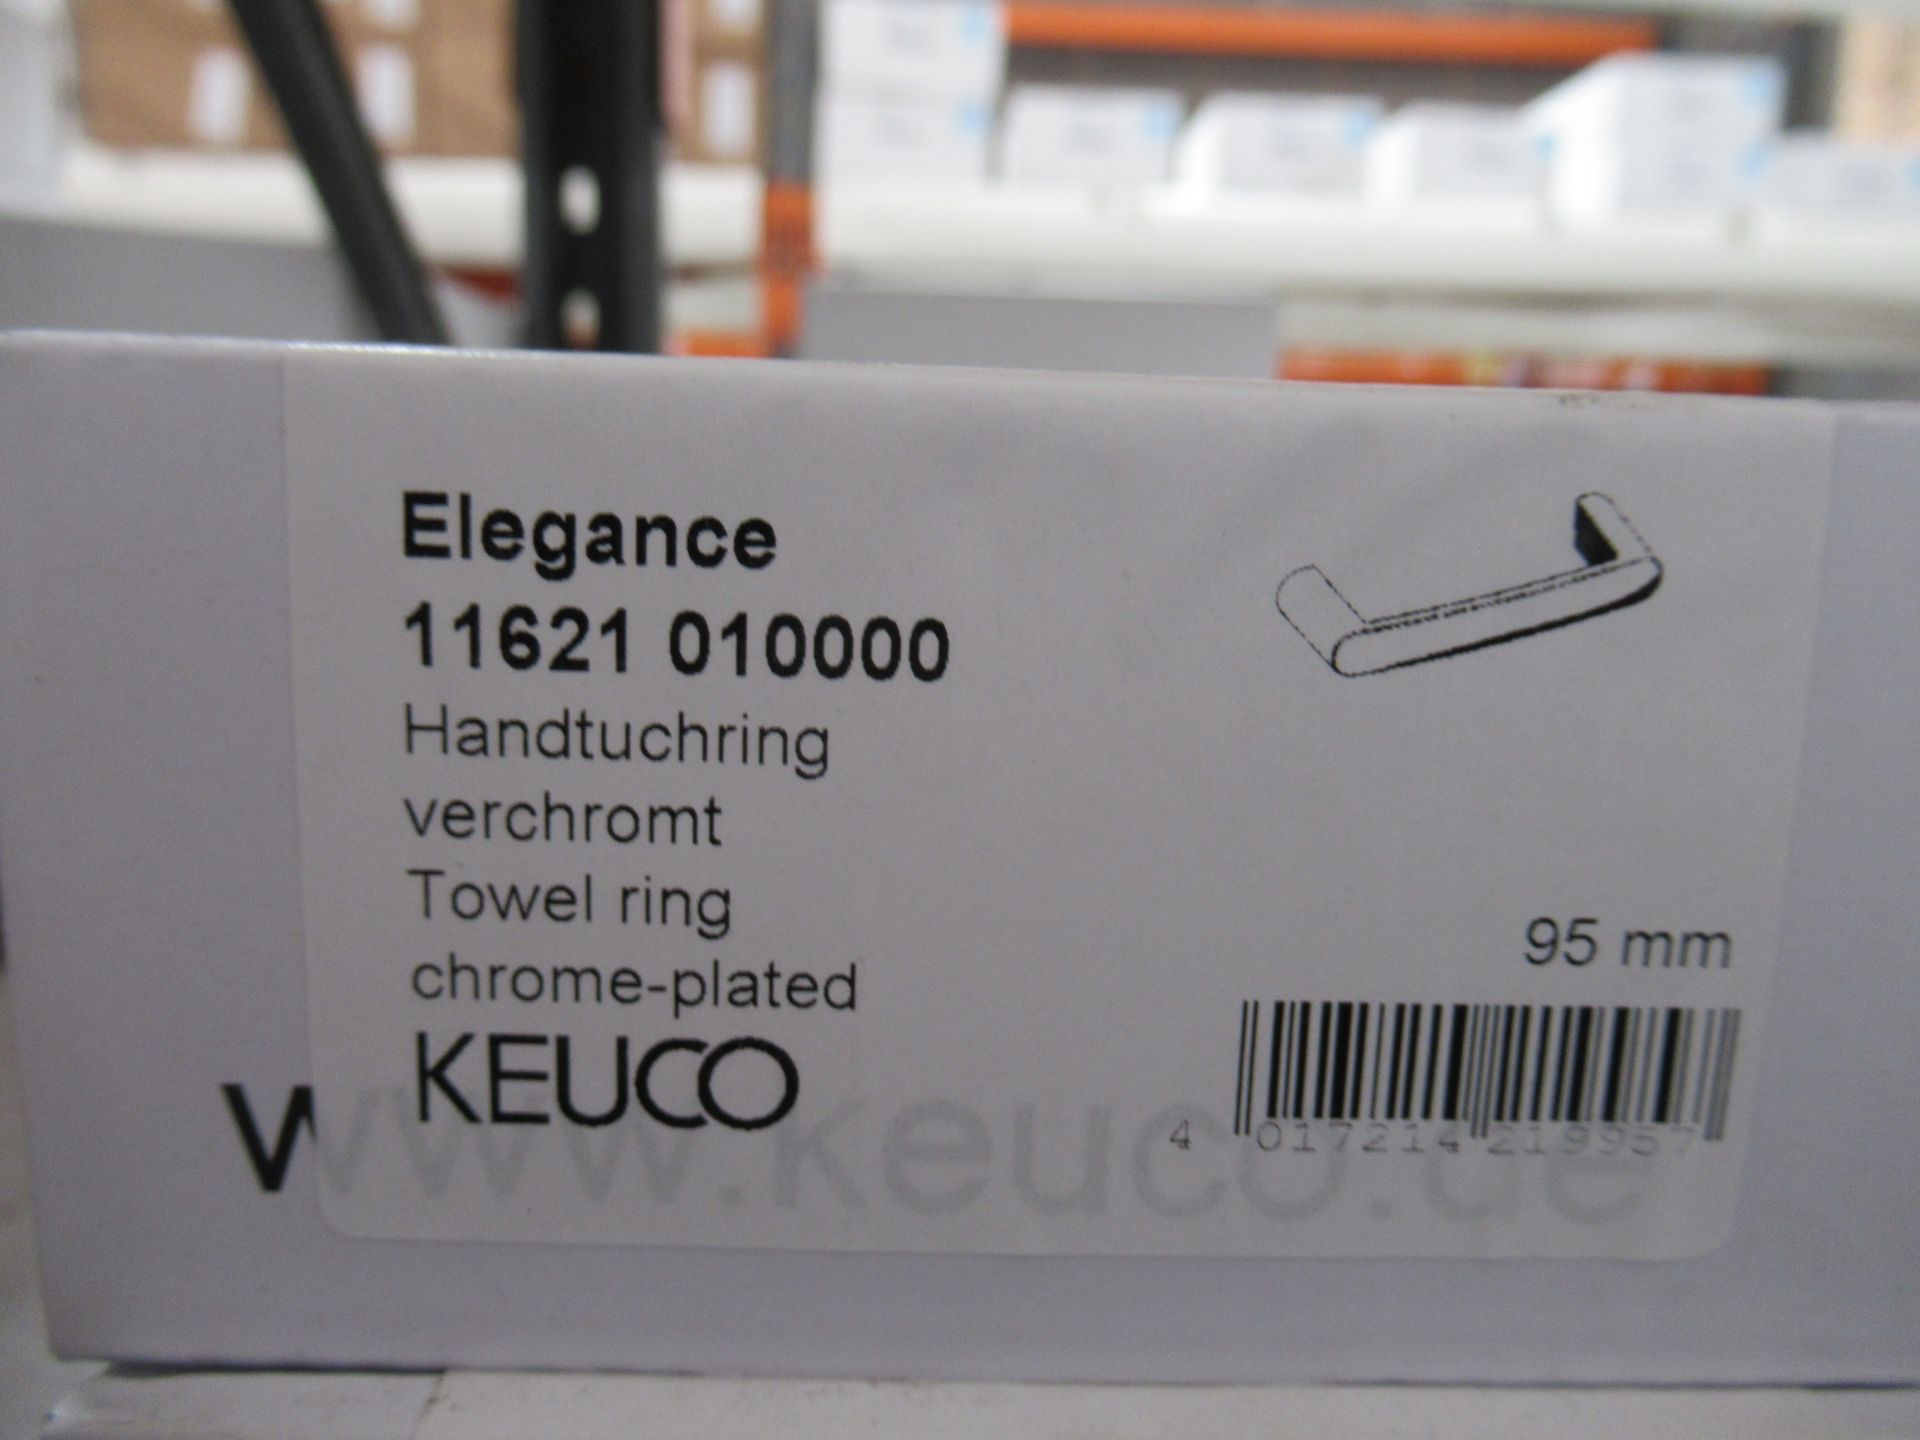 3 x Keuco Elegance Towel Rings, Chrome Plated, P/N 11621-010000 - Image 2 of 2